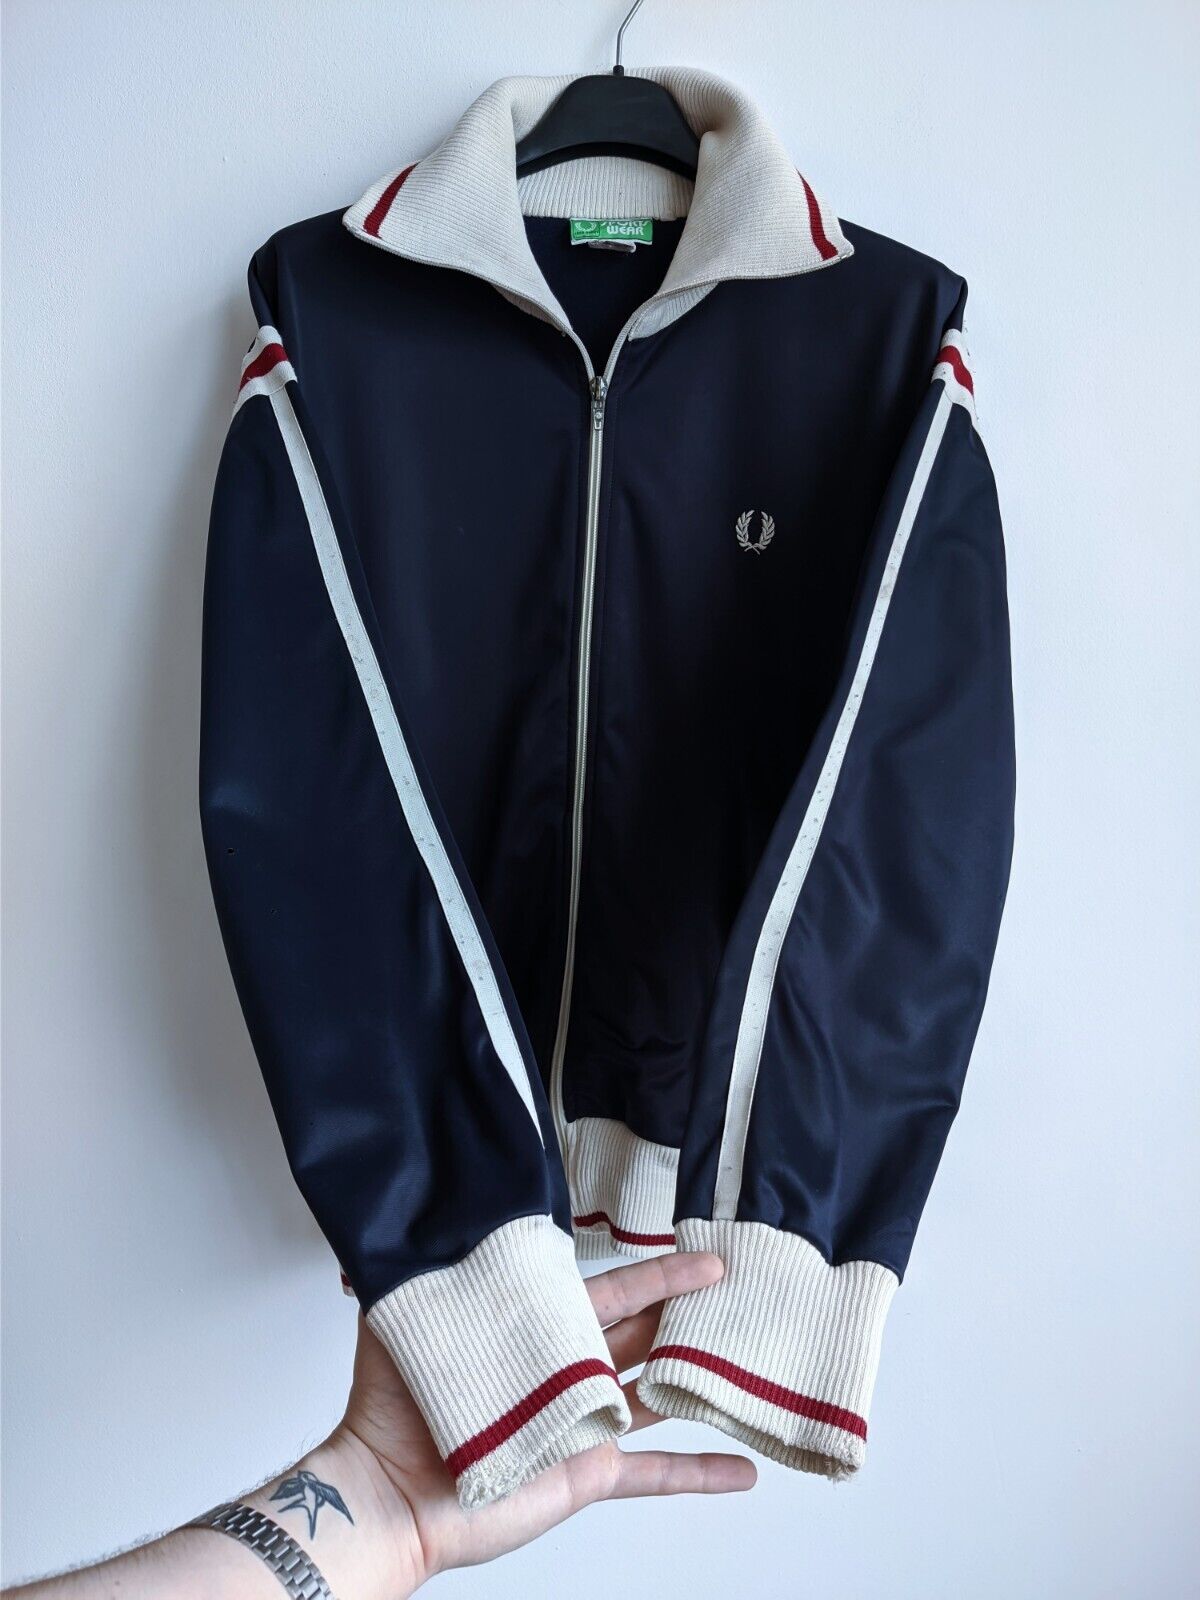 Fred Perry vintage track jacket zip up | eBay